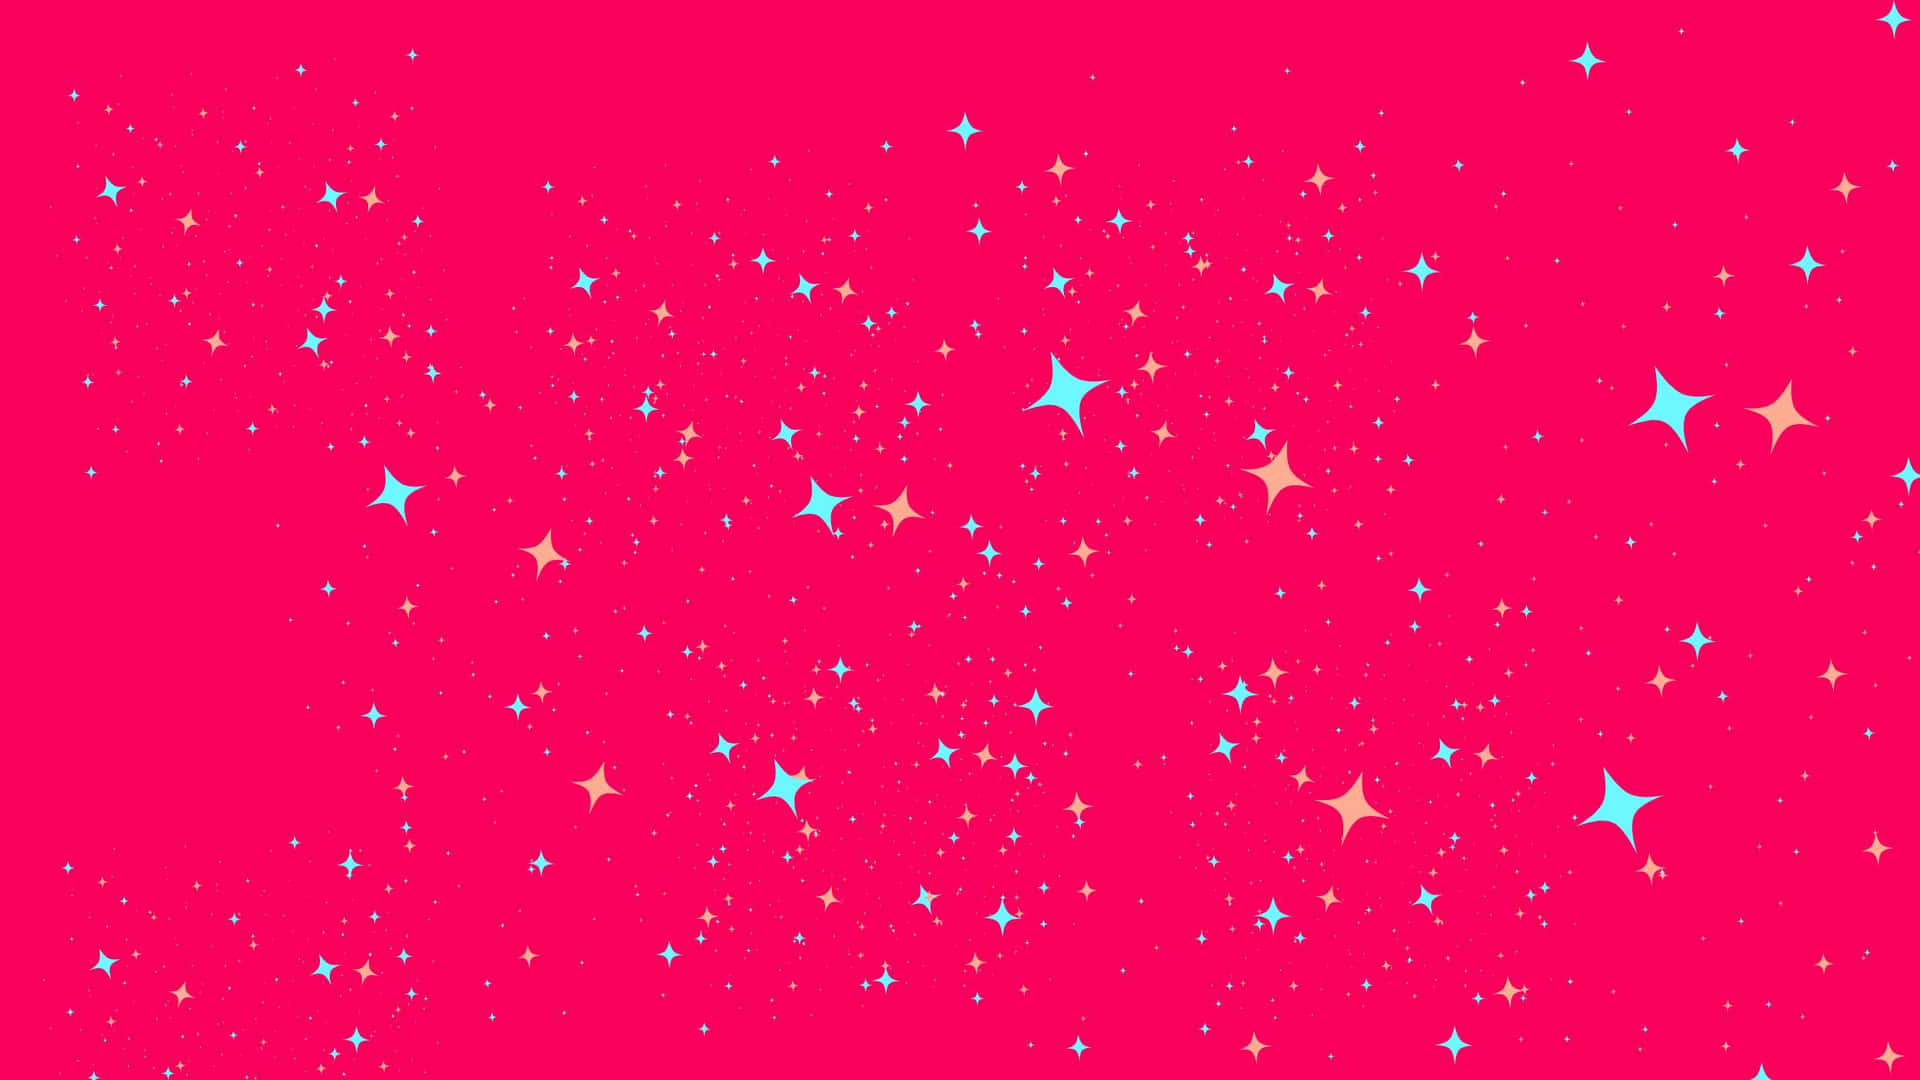 Sparkly Pink Background